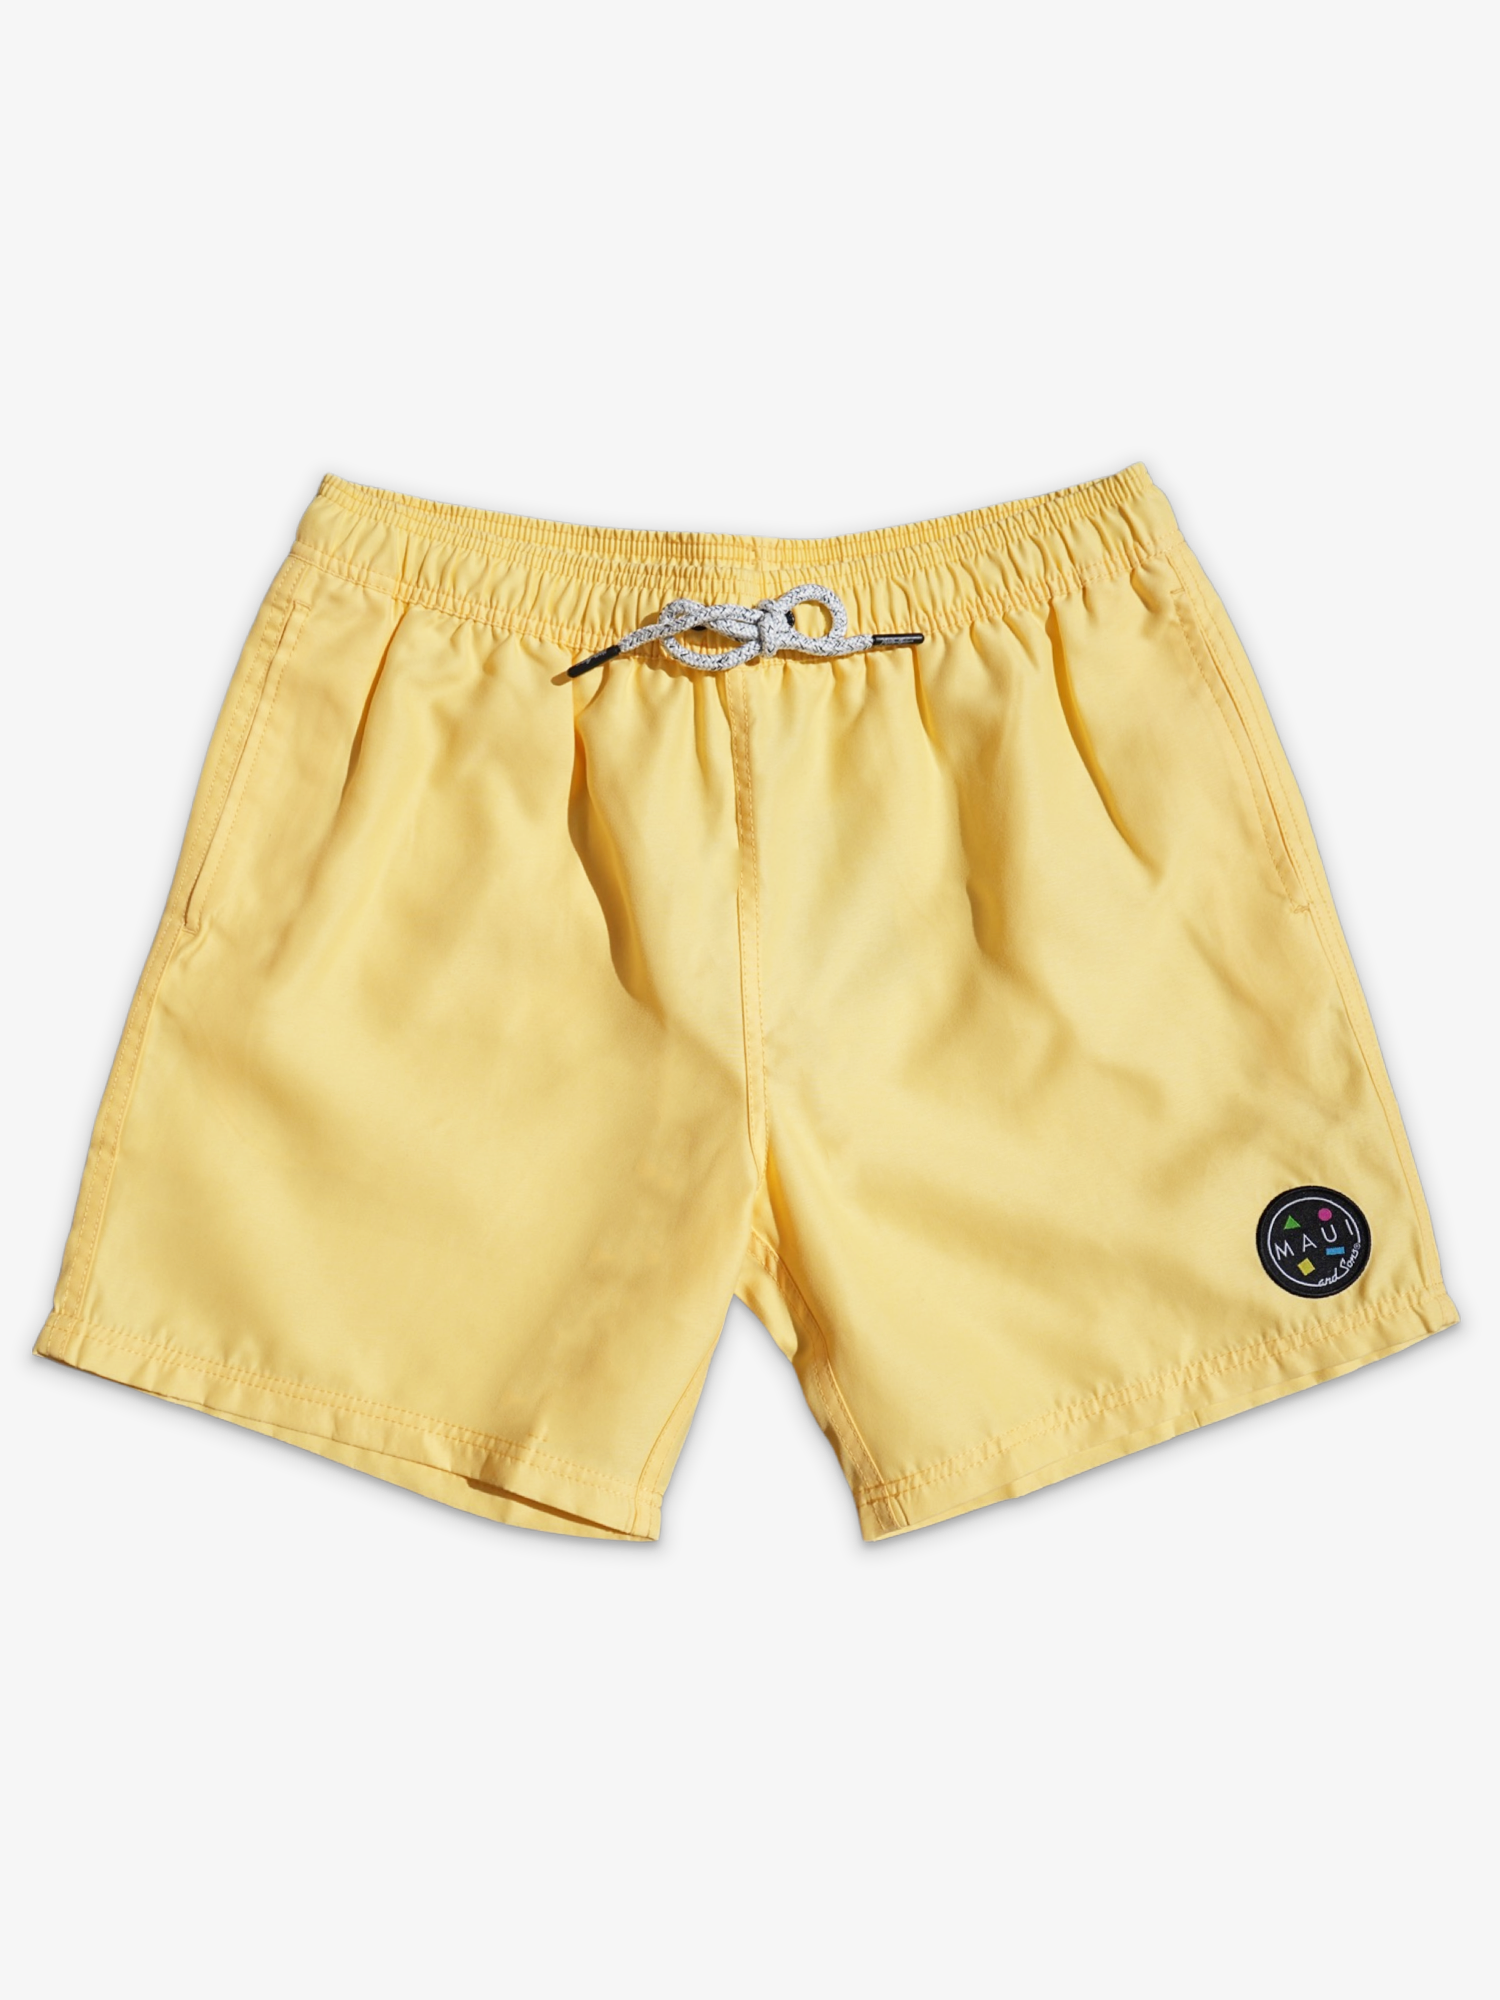 Maui ripper board shorts - Gem